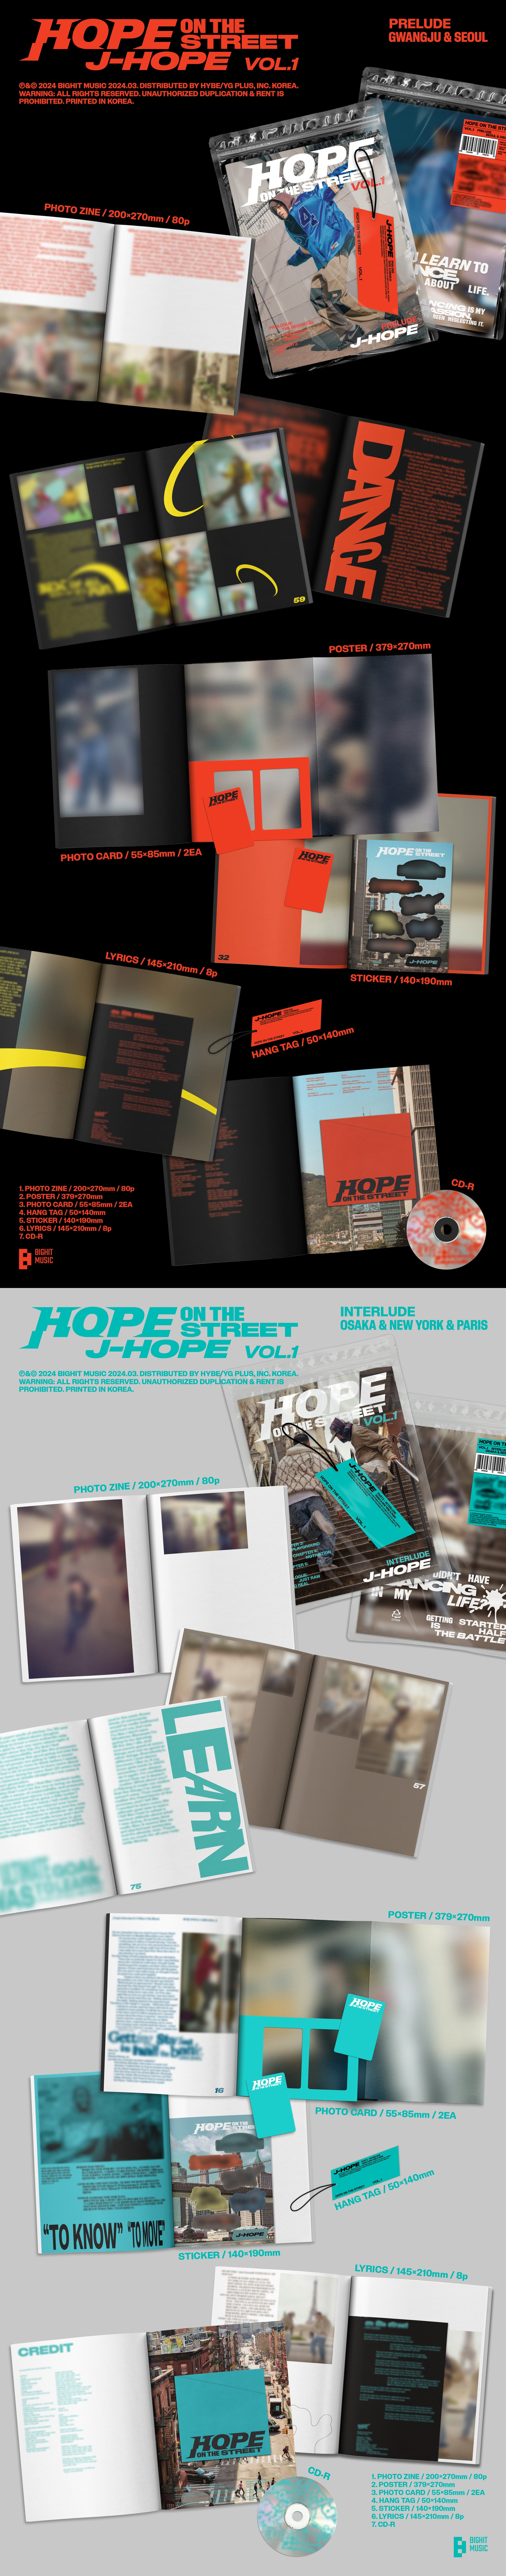 J-HOPE SPECIAL ALBUM 'HOPE ON THE STREET VOL. 1' DETAIL